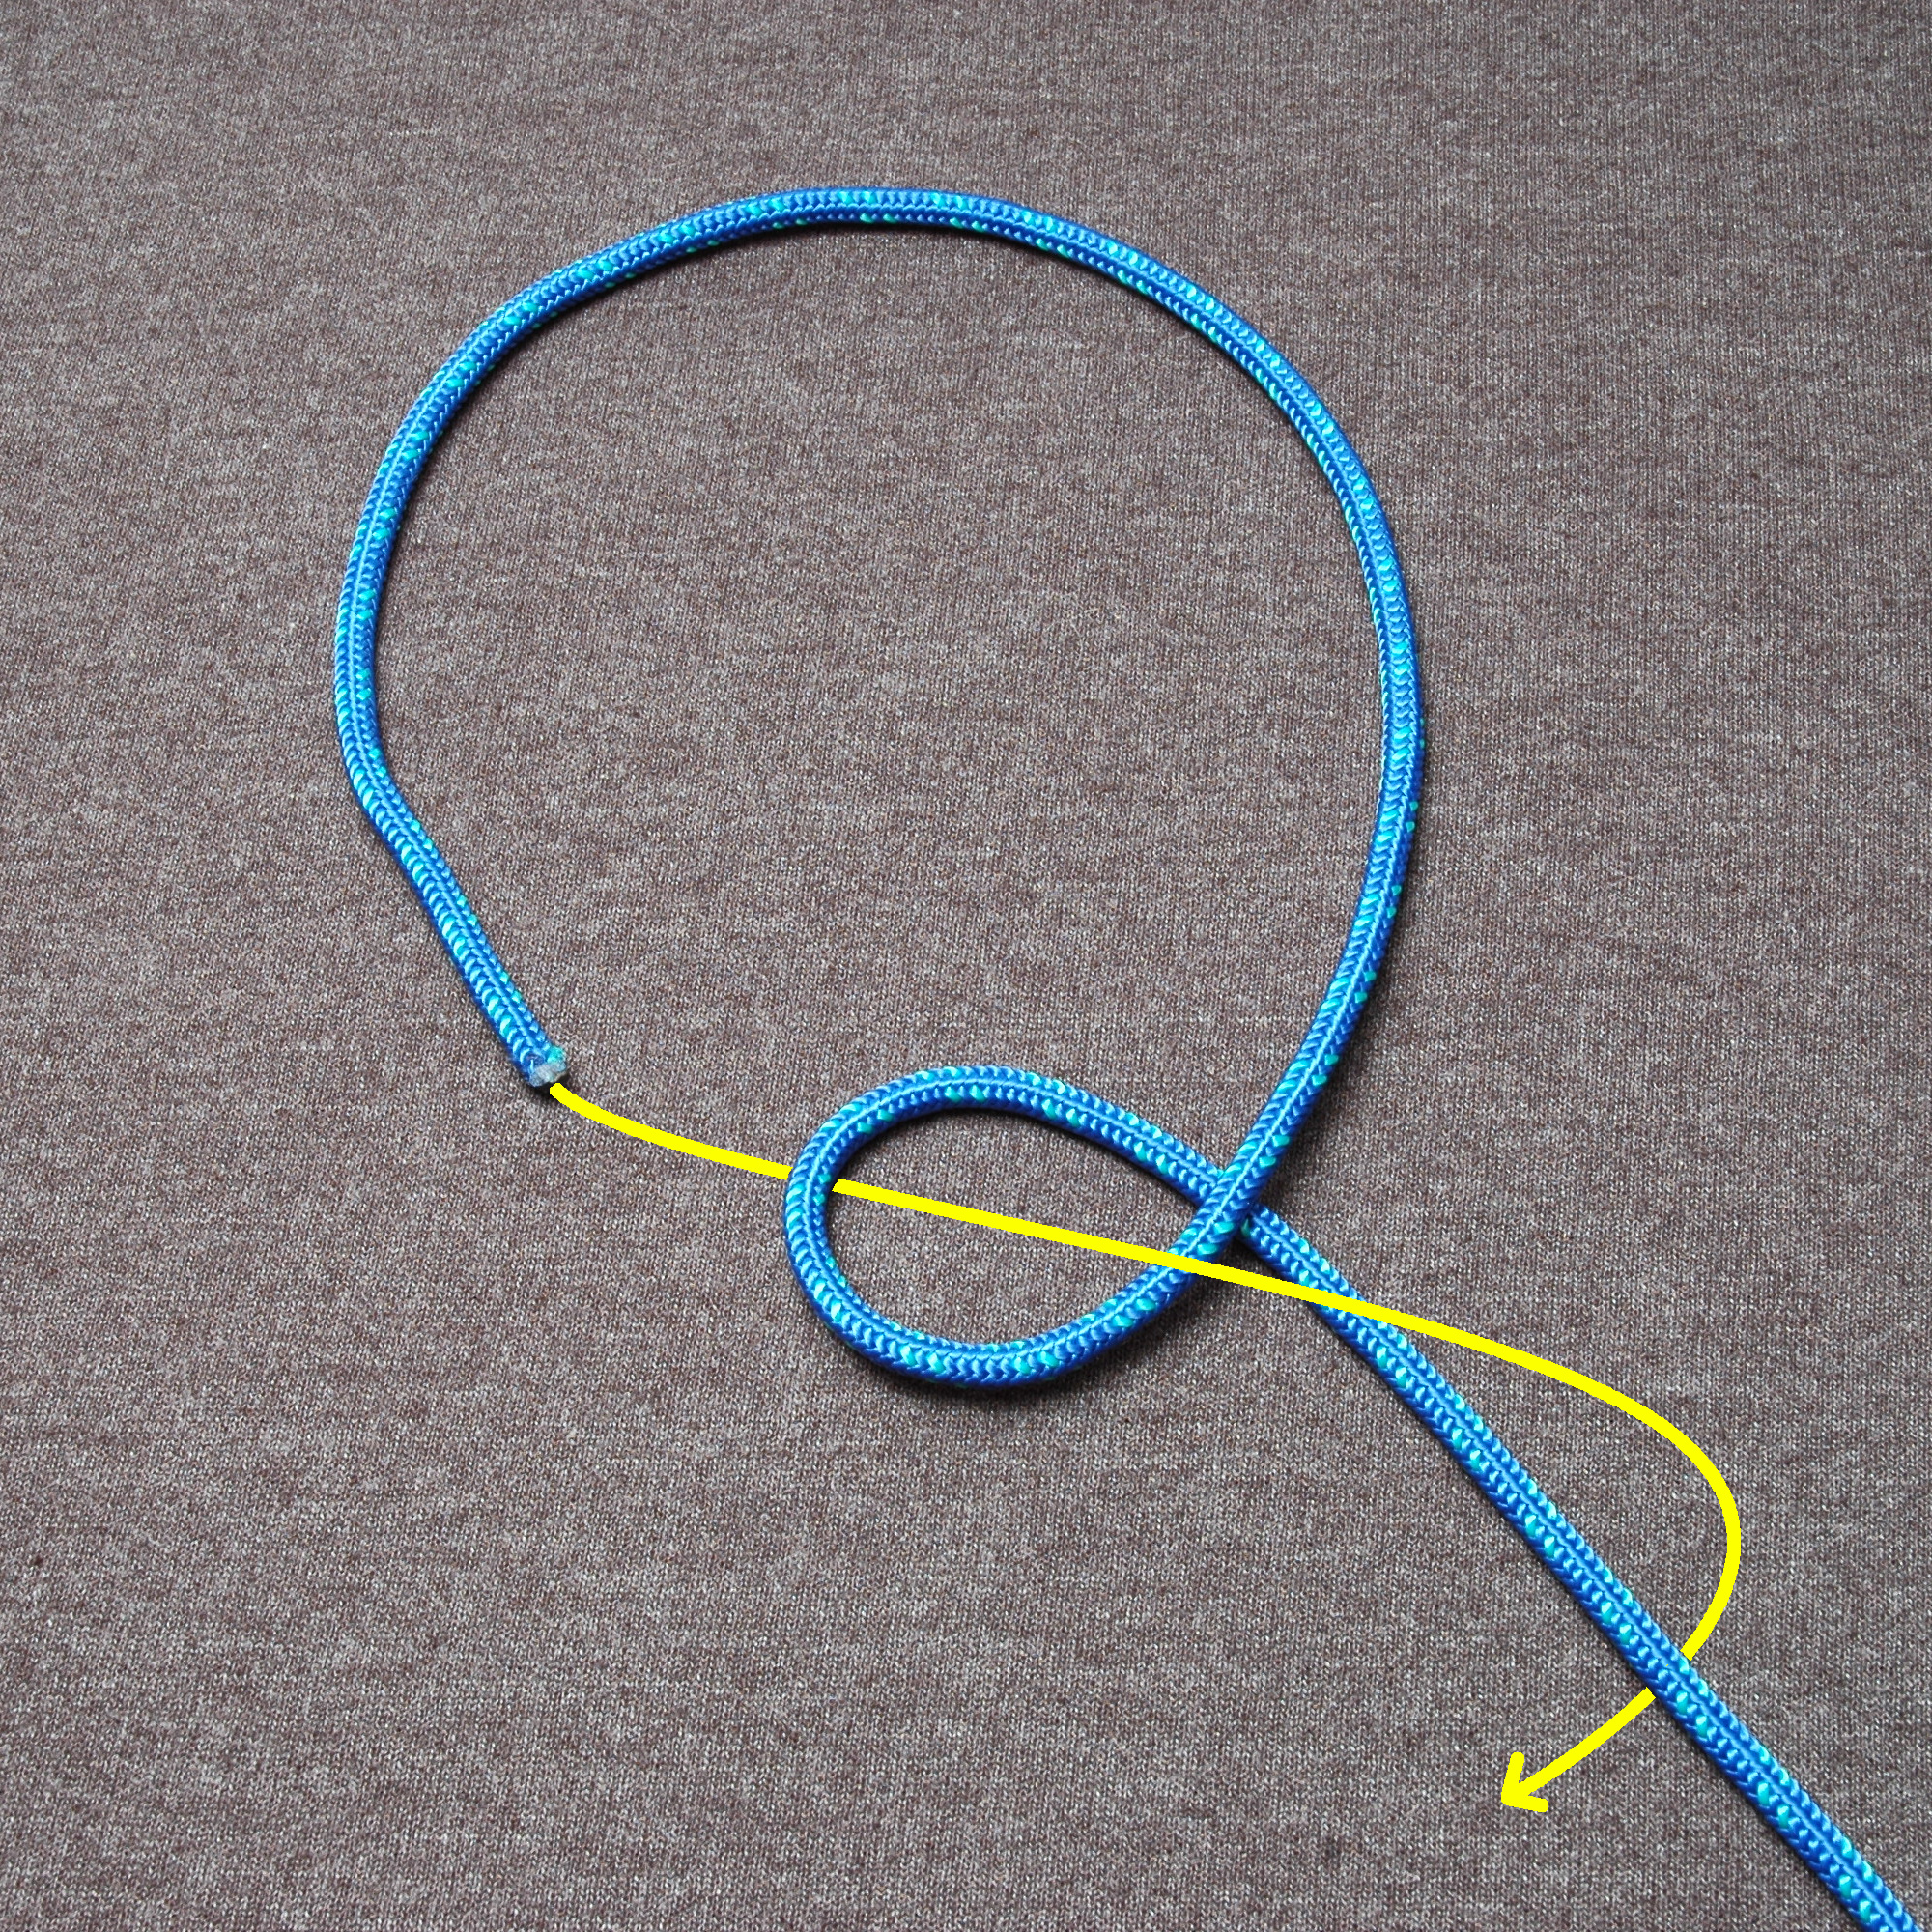 Fiador knot ABOK 1110 Tying Step 1